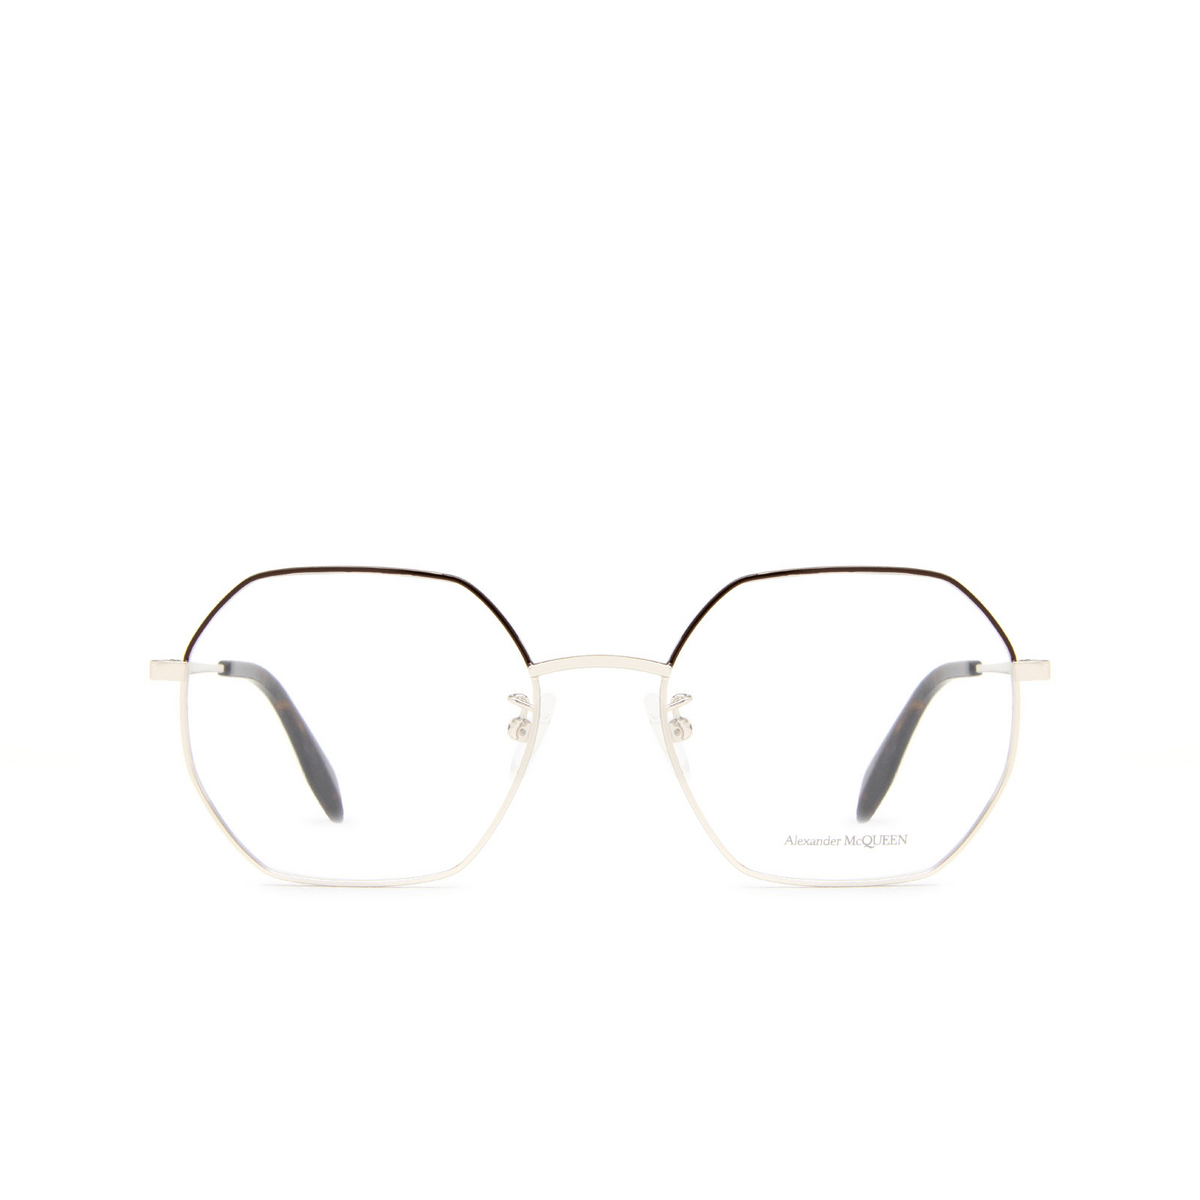 Alexander McQueen eyeglasses - Mia Burton